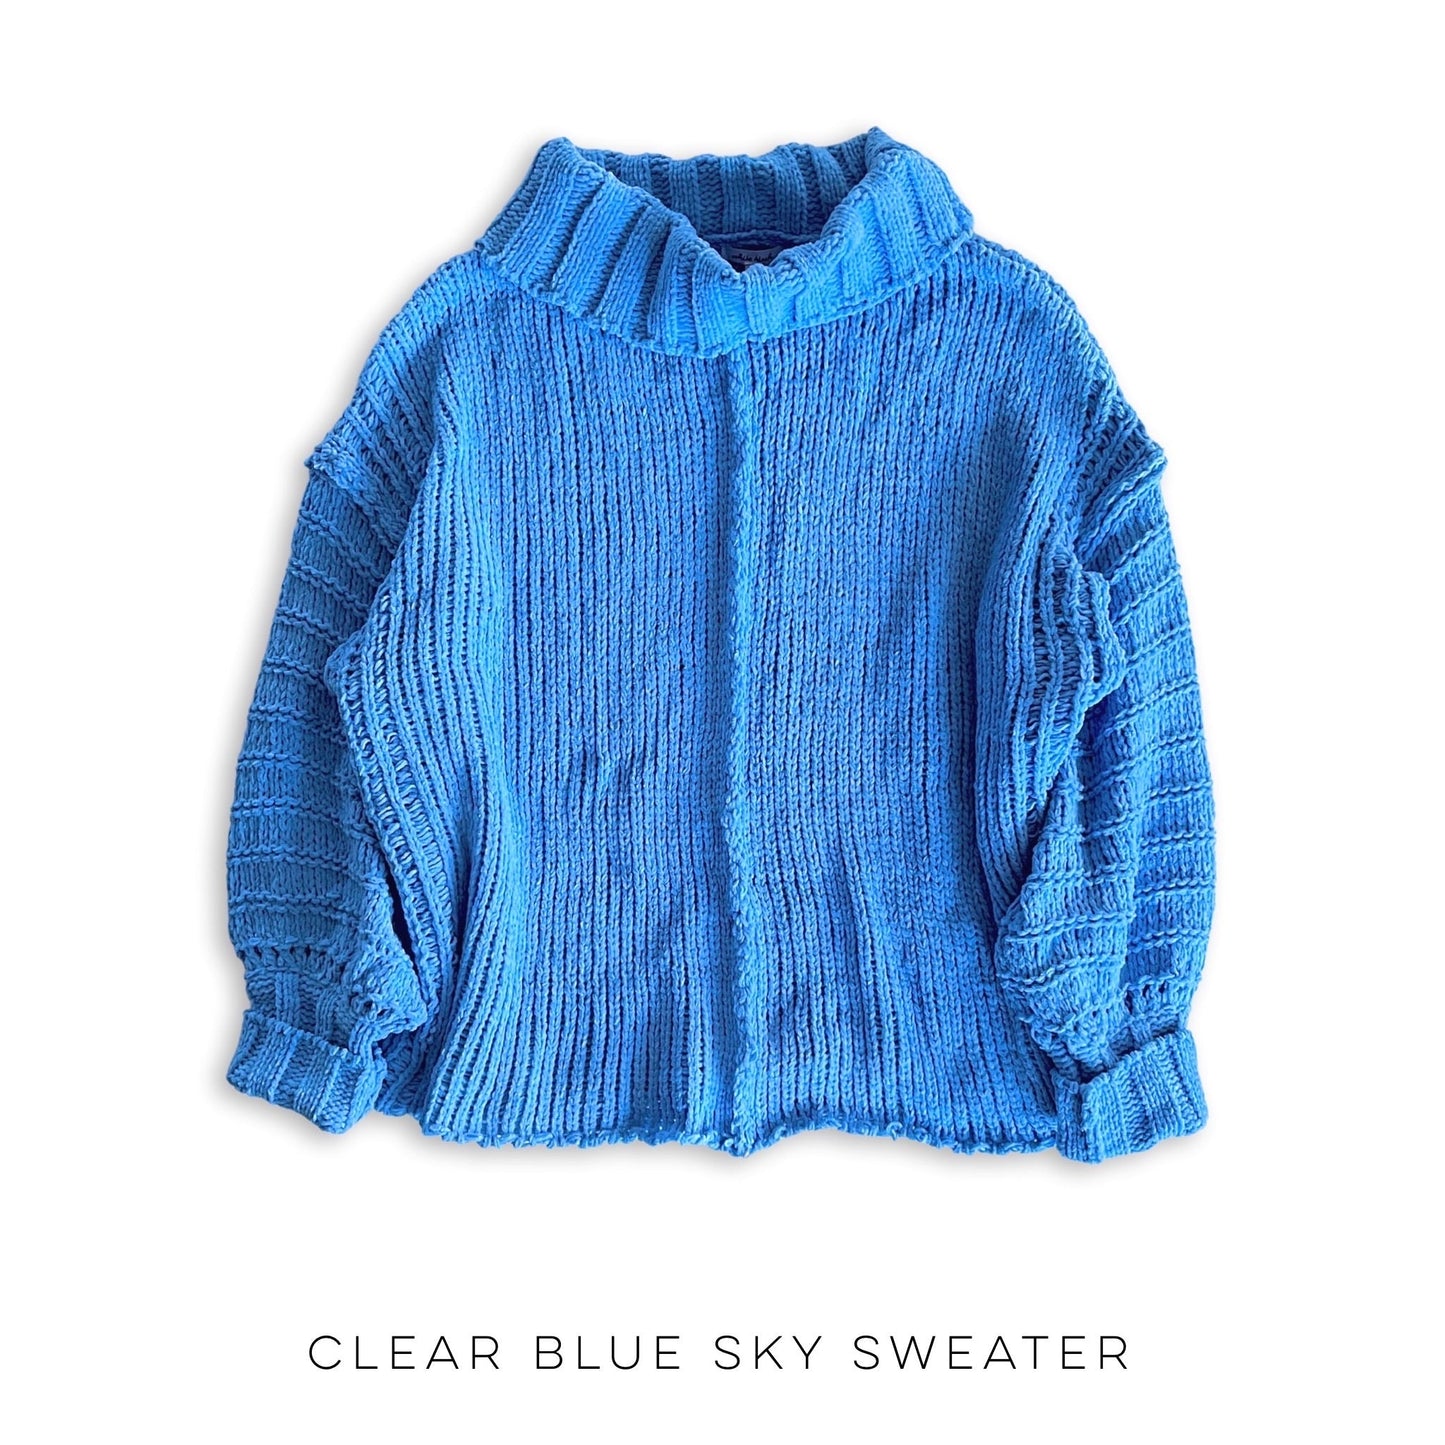 Clear Blue Sky Sweater